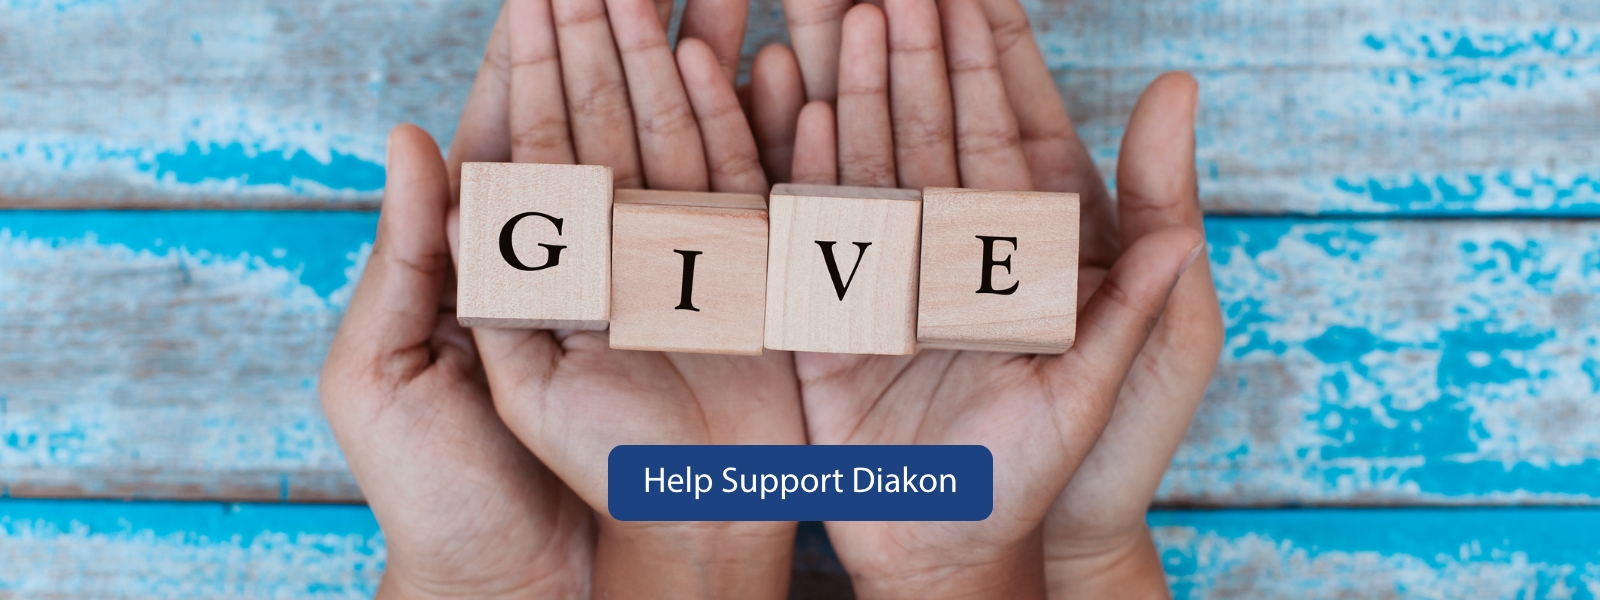 Help support diakon